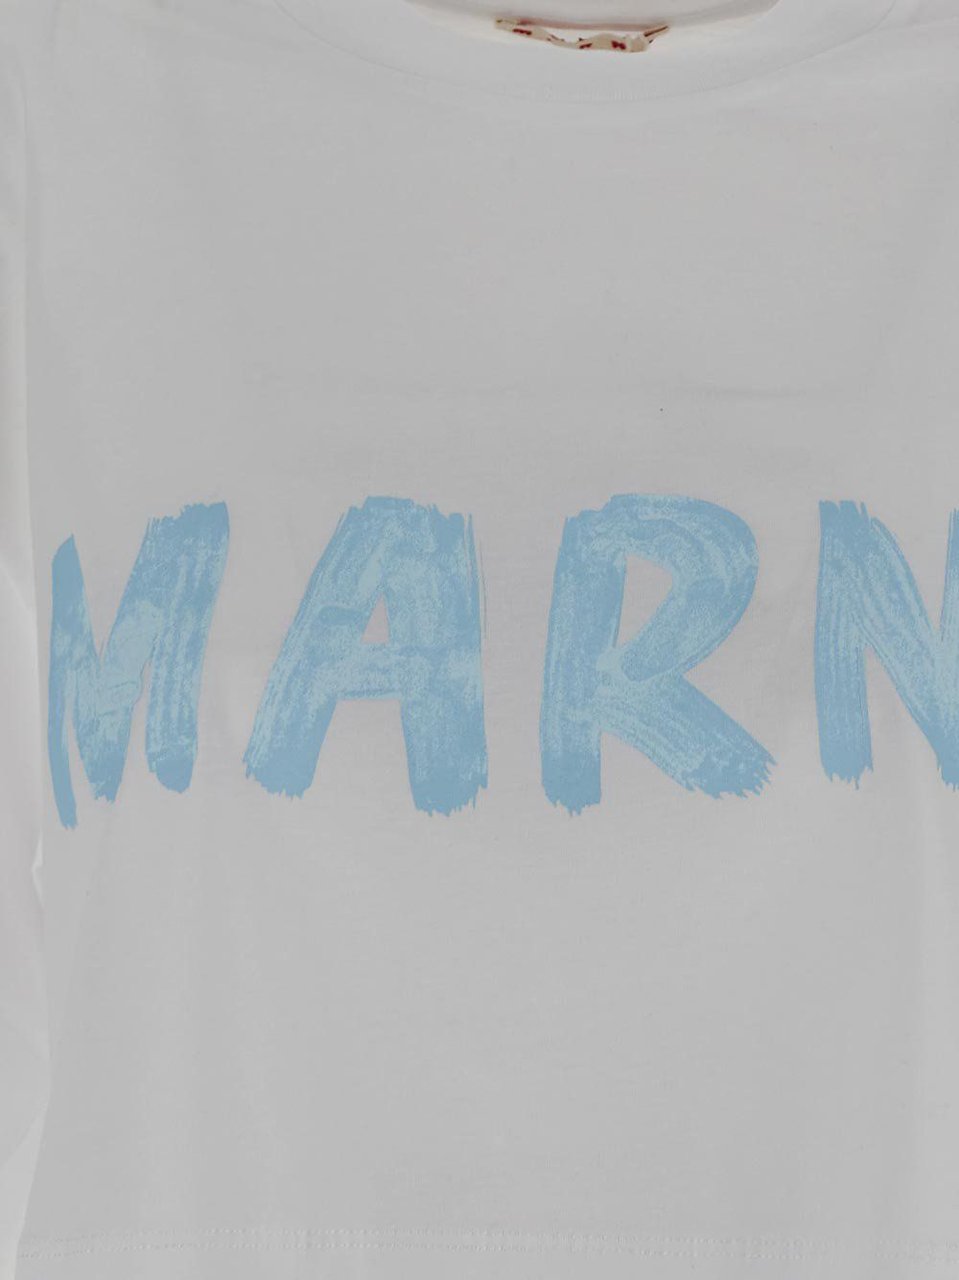 Marni T-shirts And Polos White Neutraal